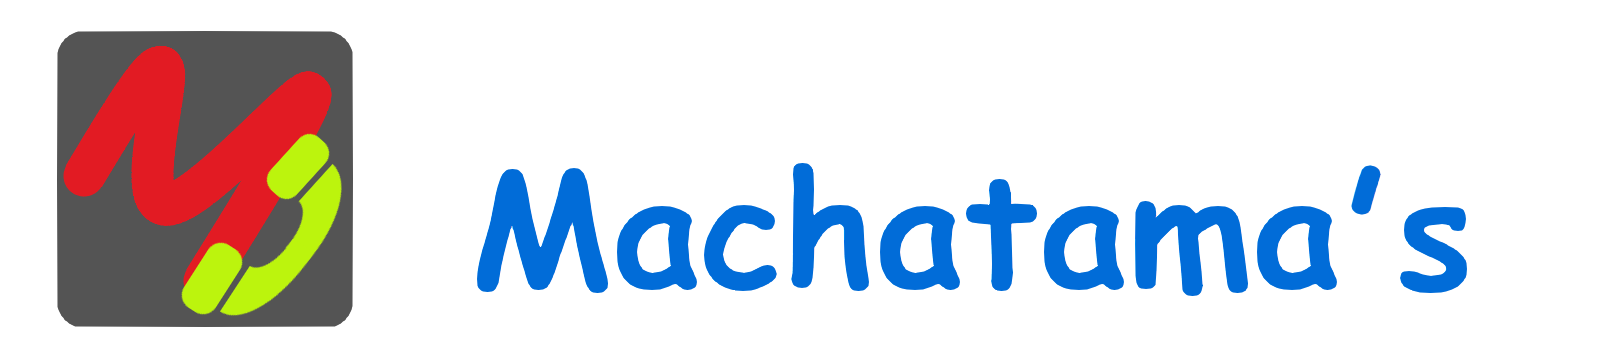 Machatama's